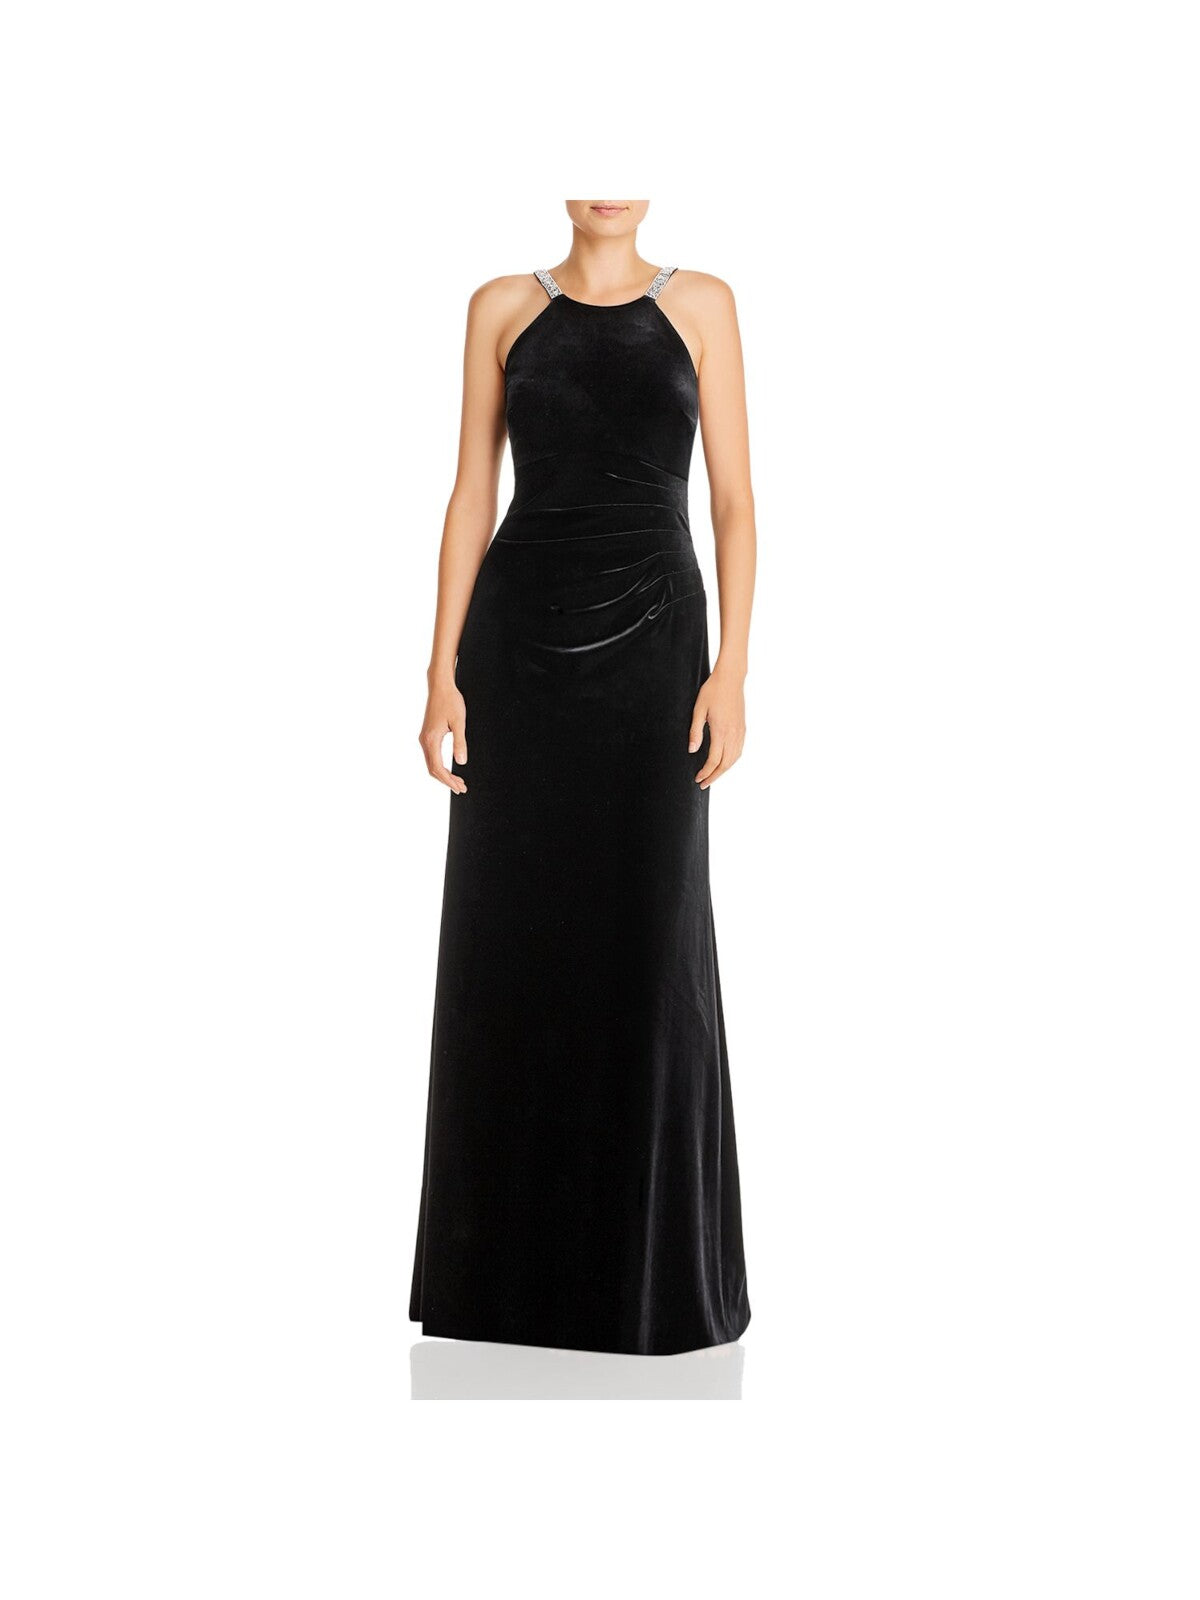 AQUA FORMAL Womens Black Textured Zippered Rhinestone Straps Lined Pleated Sleeveless Jewel Neck Full-Length Evening Gown Dress 4